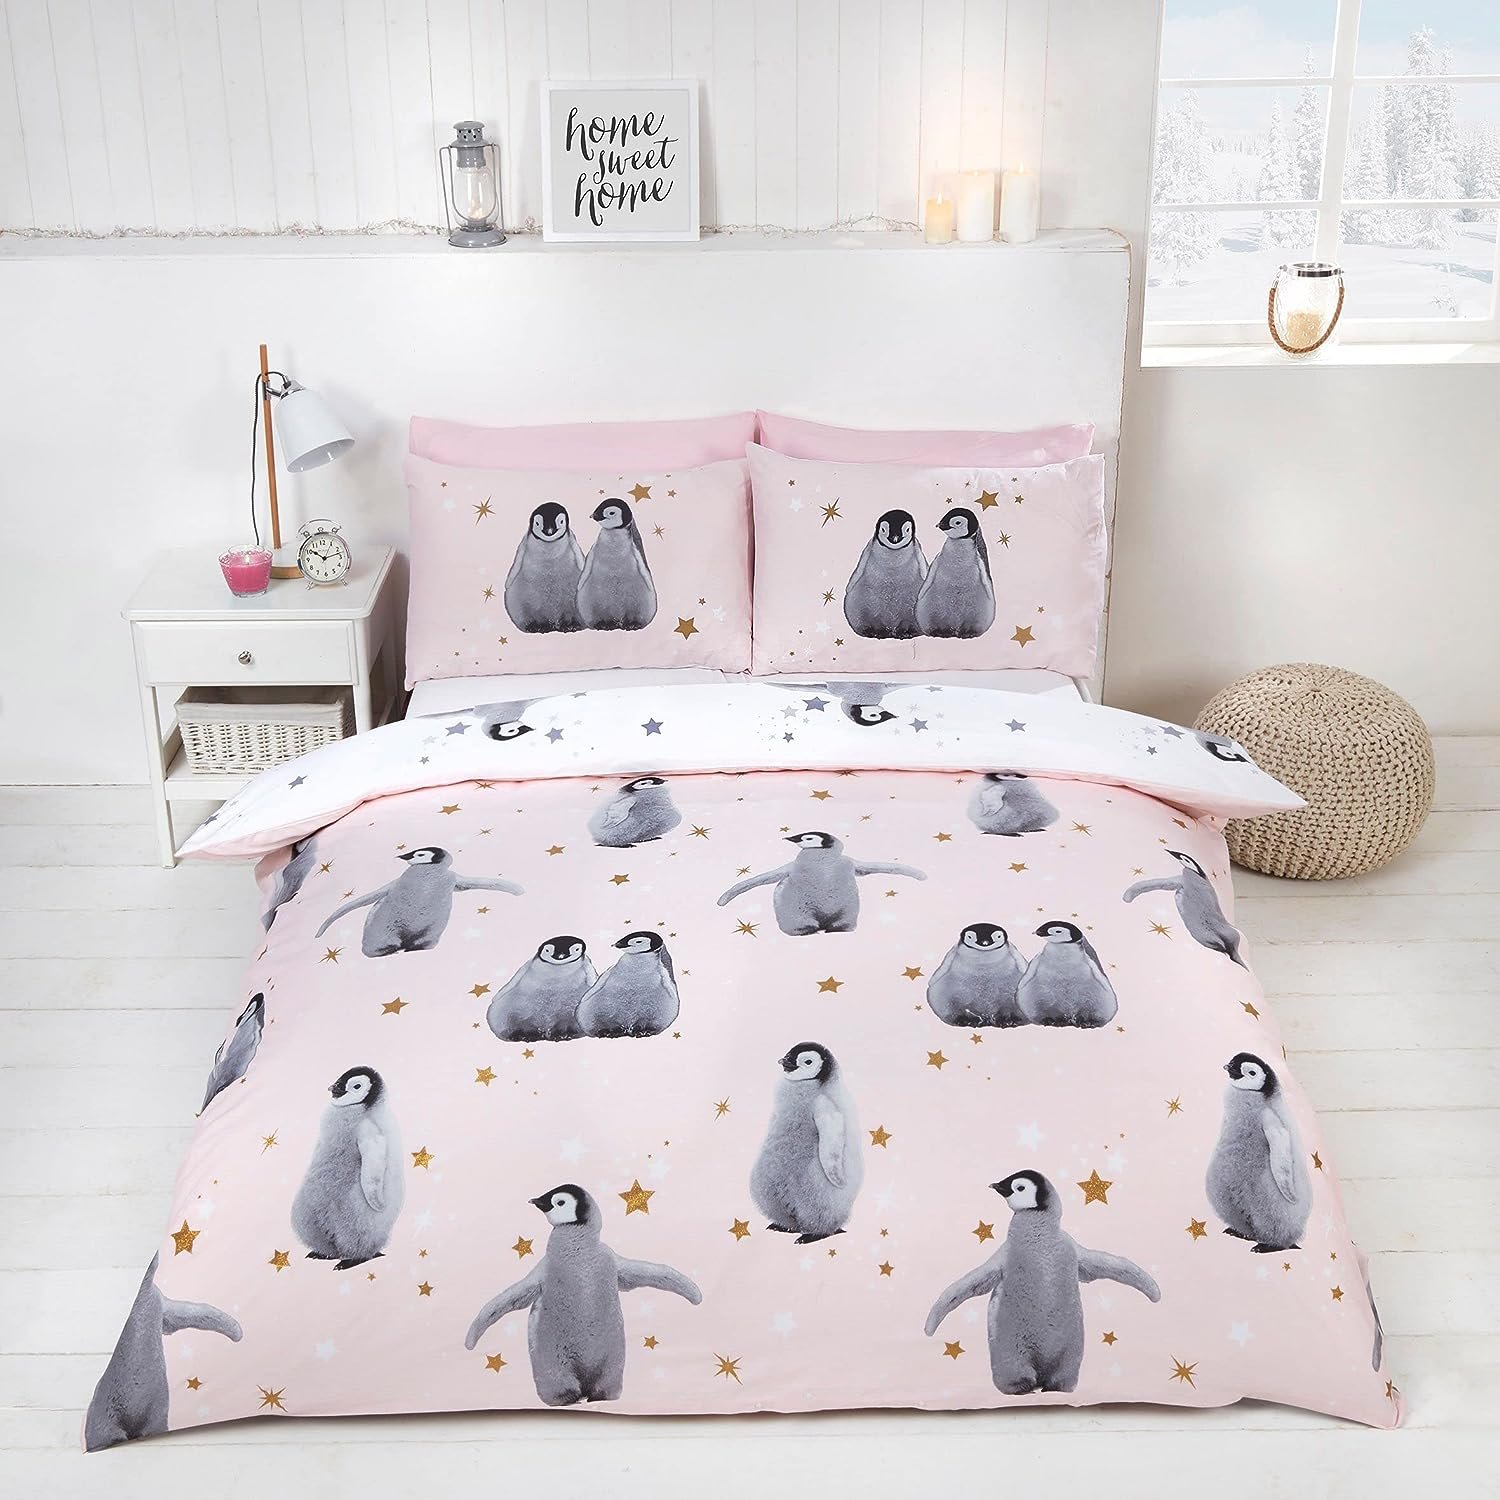 Rapport Home Starry Penguins Pink Duvet Cover Set Single Review